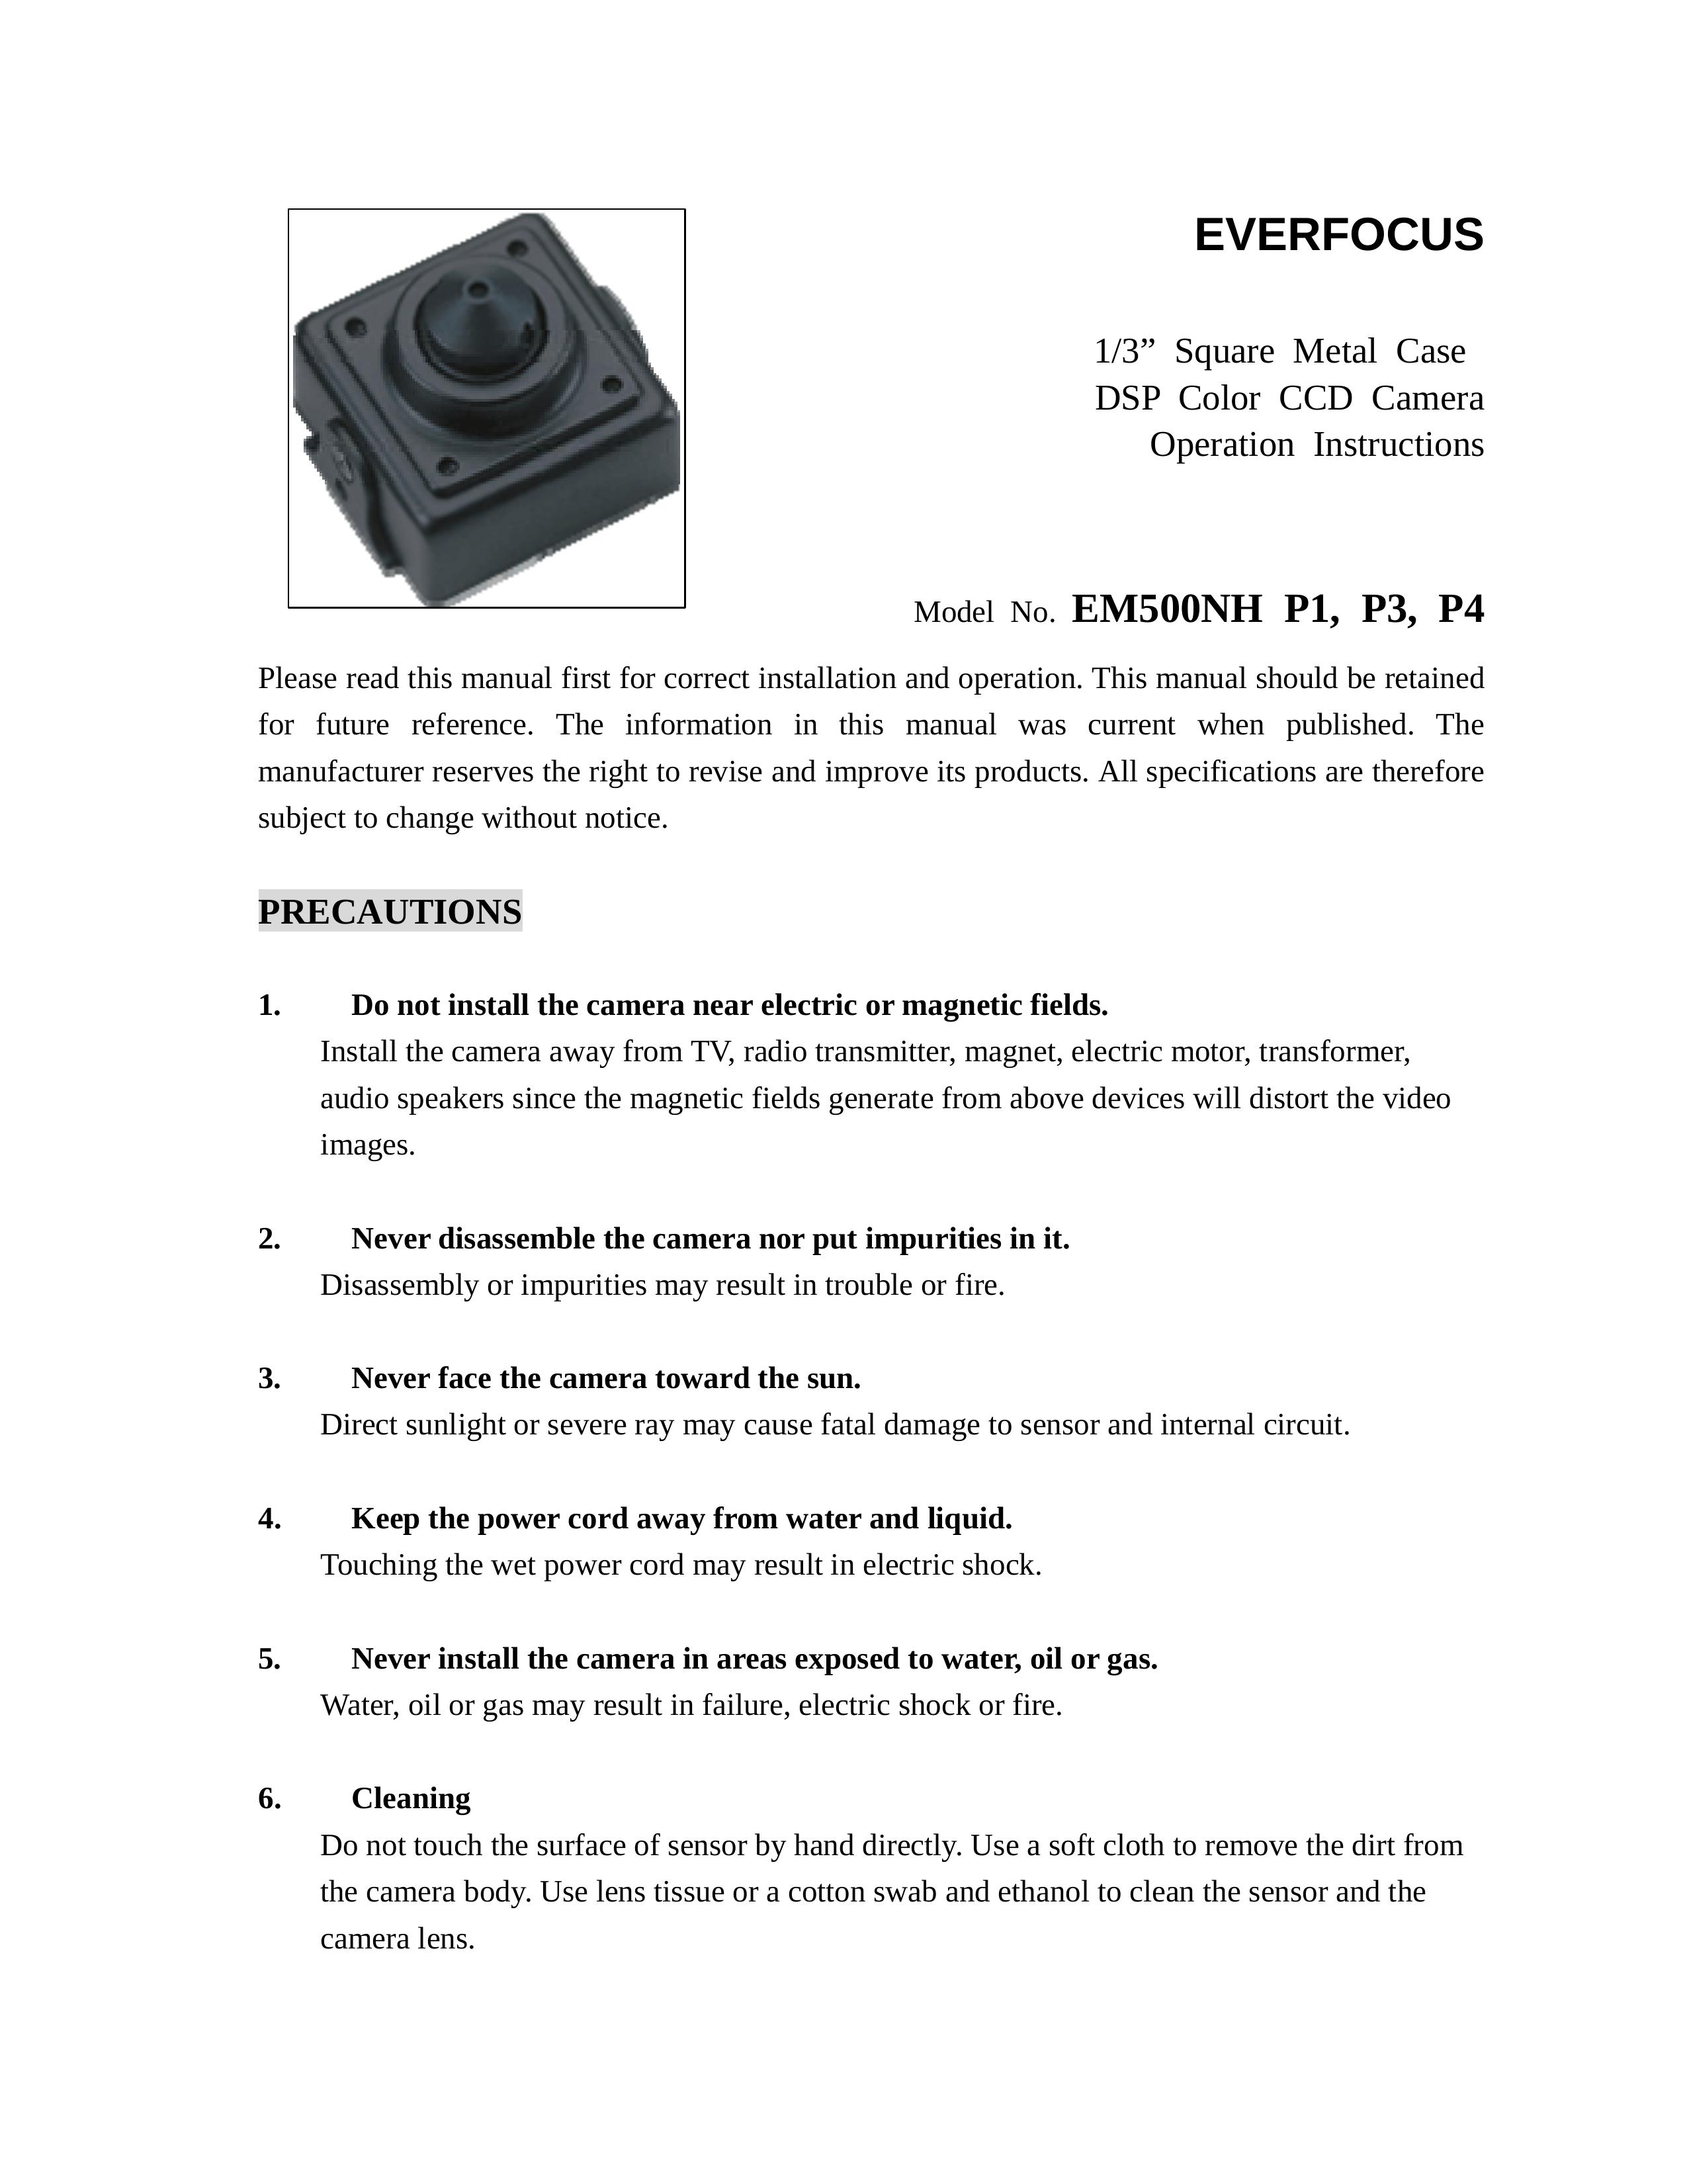 EverFocus EM500NH P3 Digital Camera User Manual